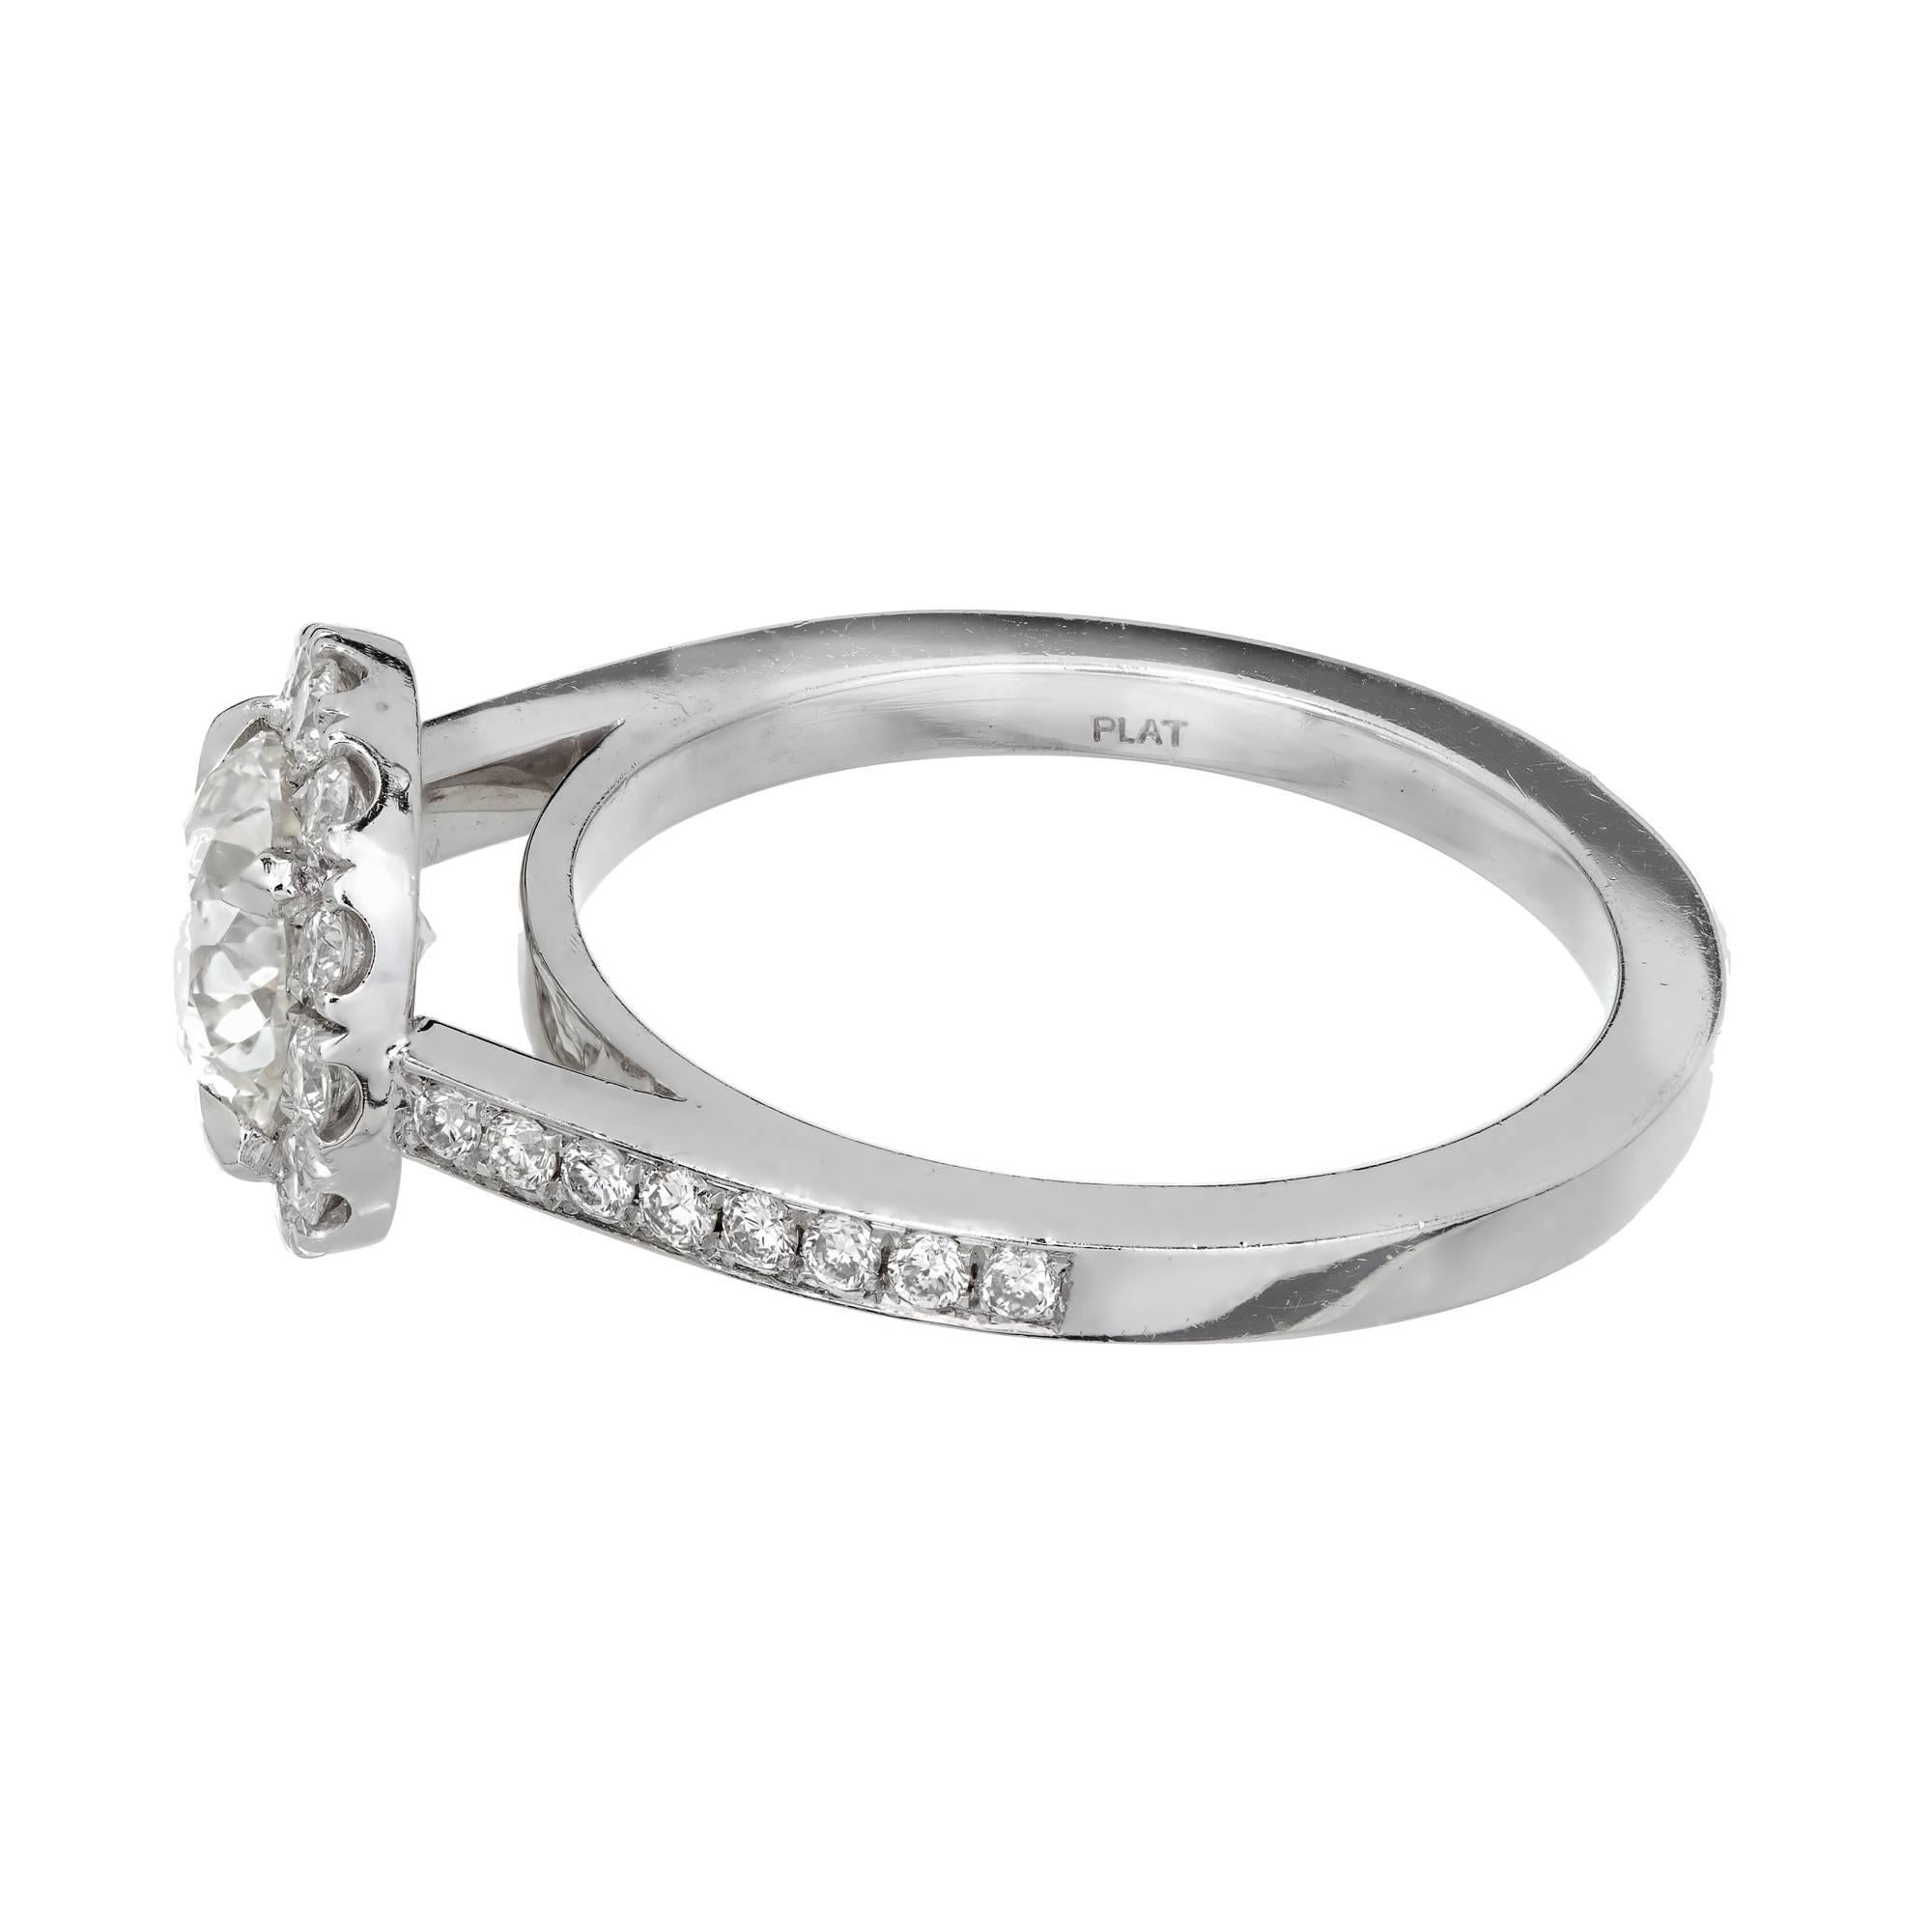 Women's Peter Suchy GIA Certified 1.24 Carat White Diamond Halo Platinum Engagement Ring